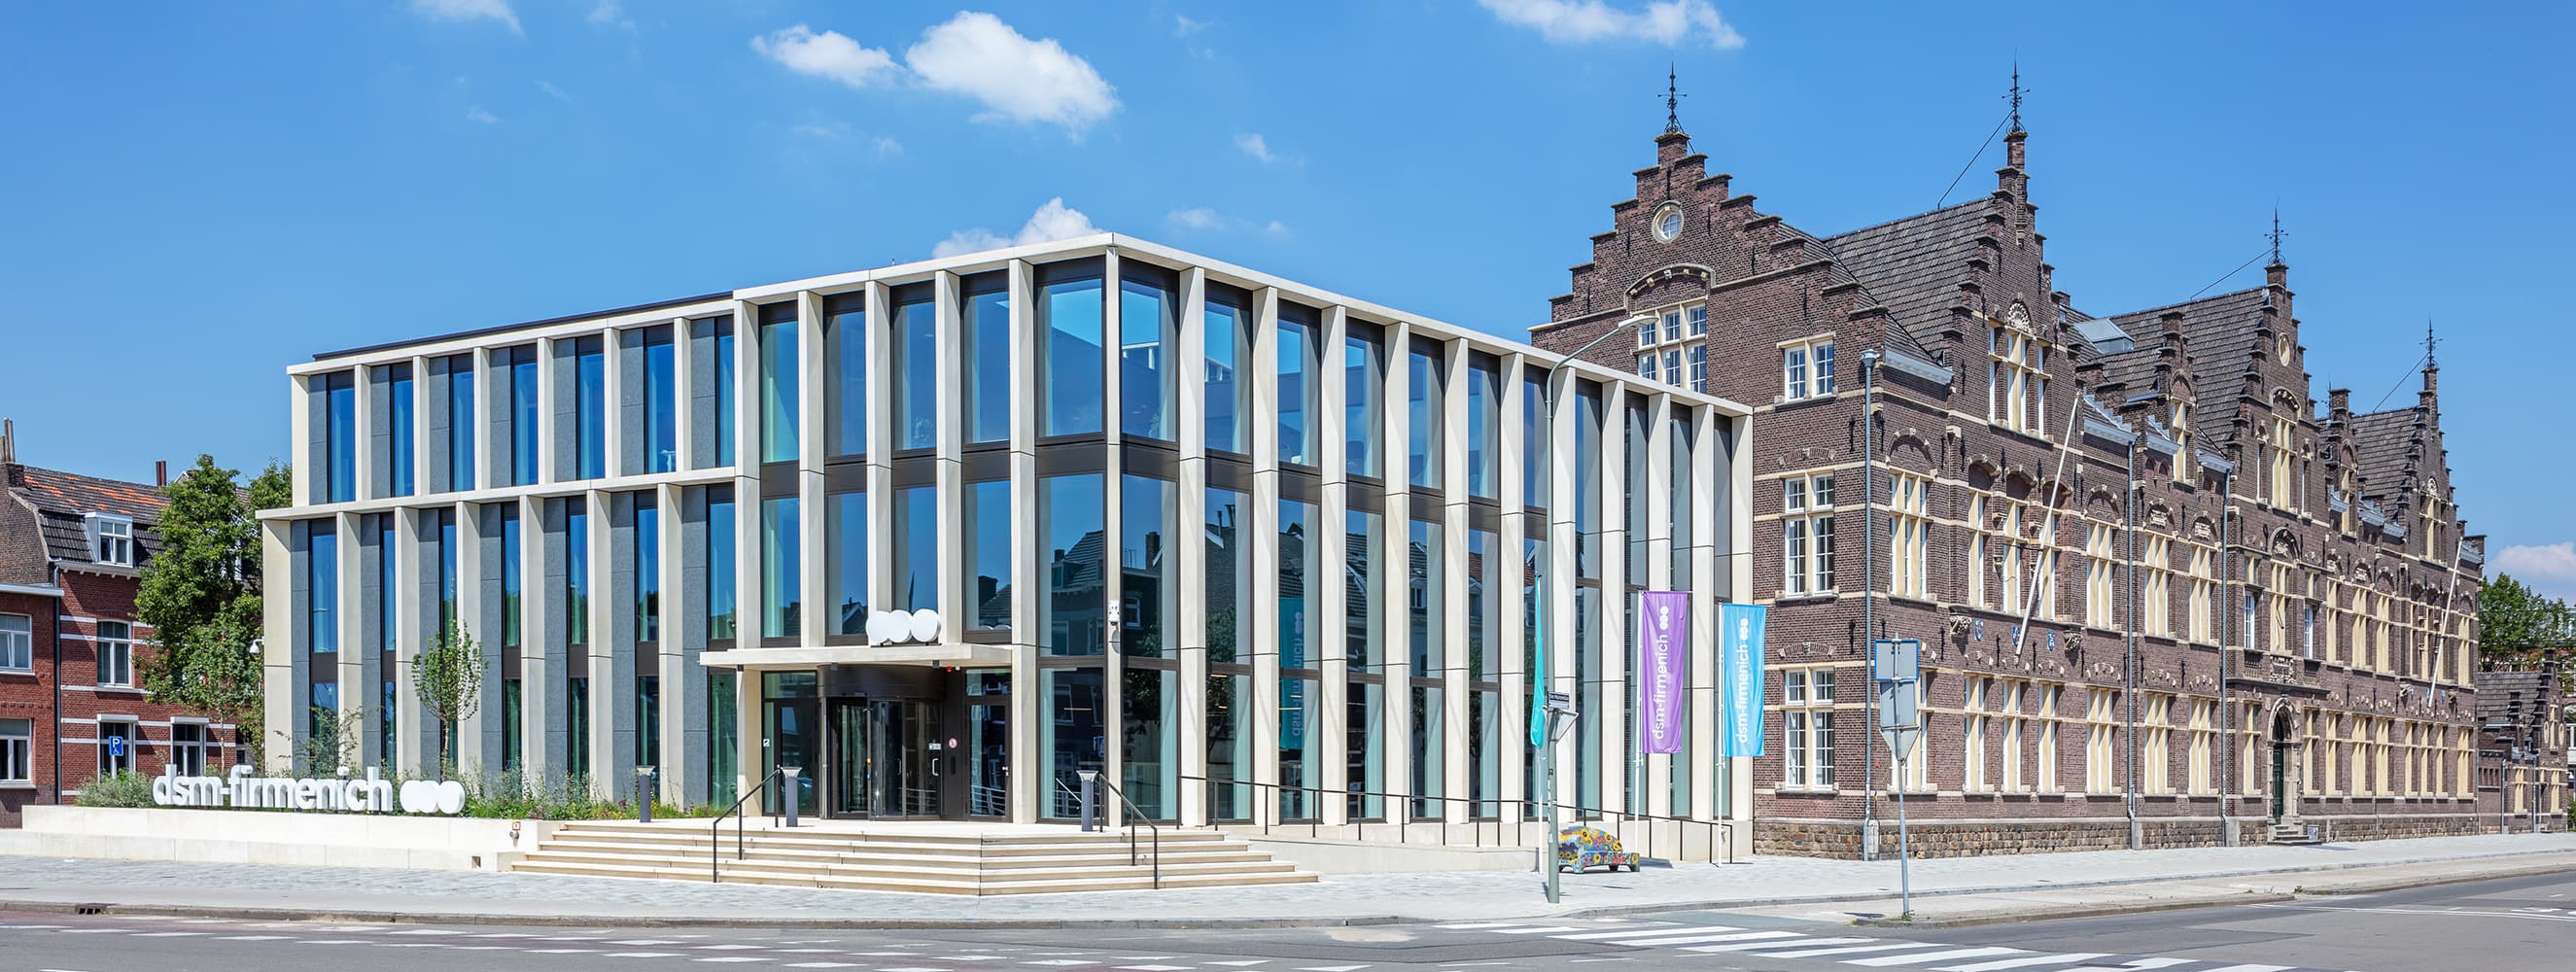 Zonnegevel Hoofdkantoor DSM Maastricht | Solar Facade Head office DSM Maastricht | Solarix